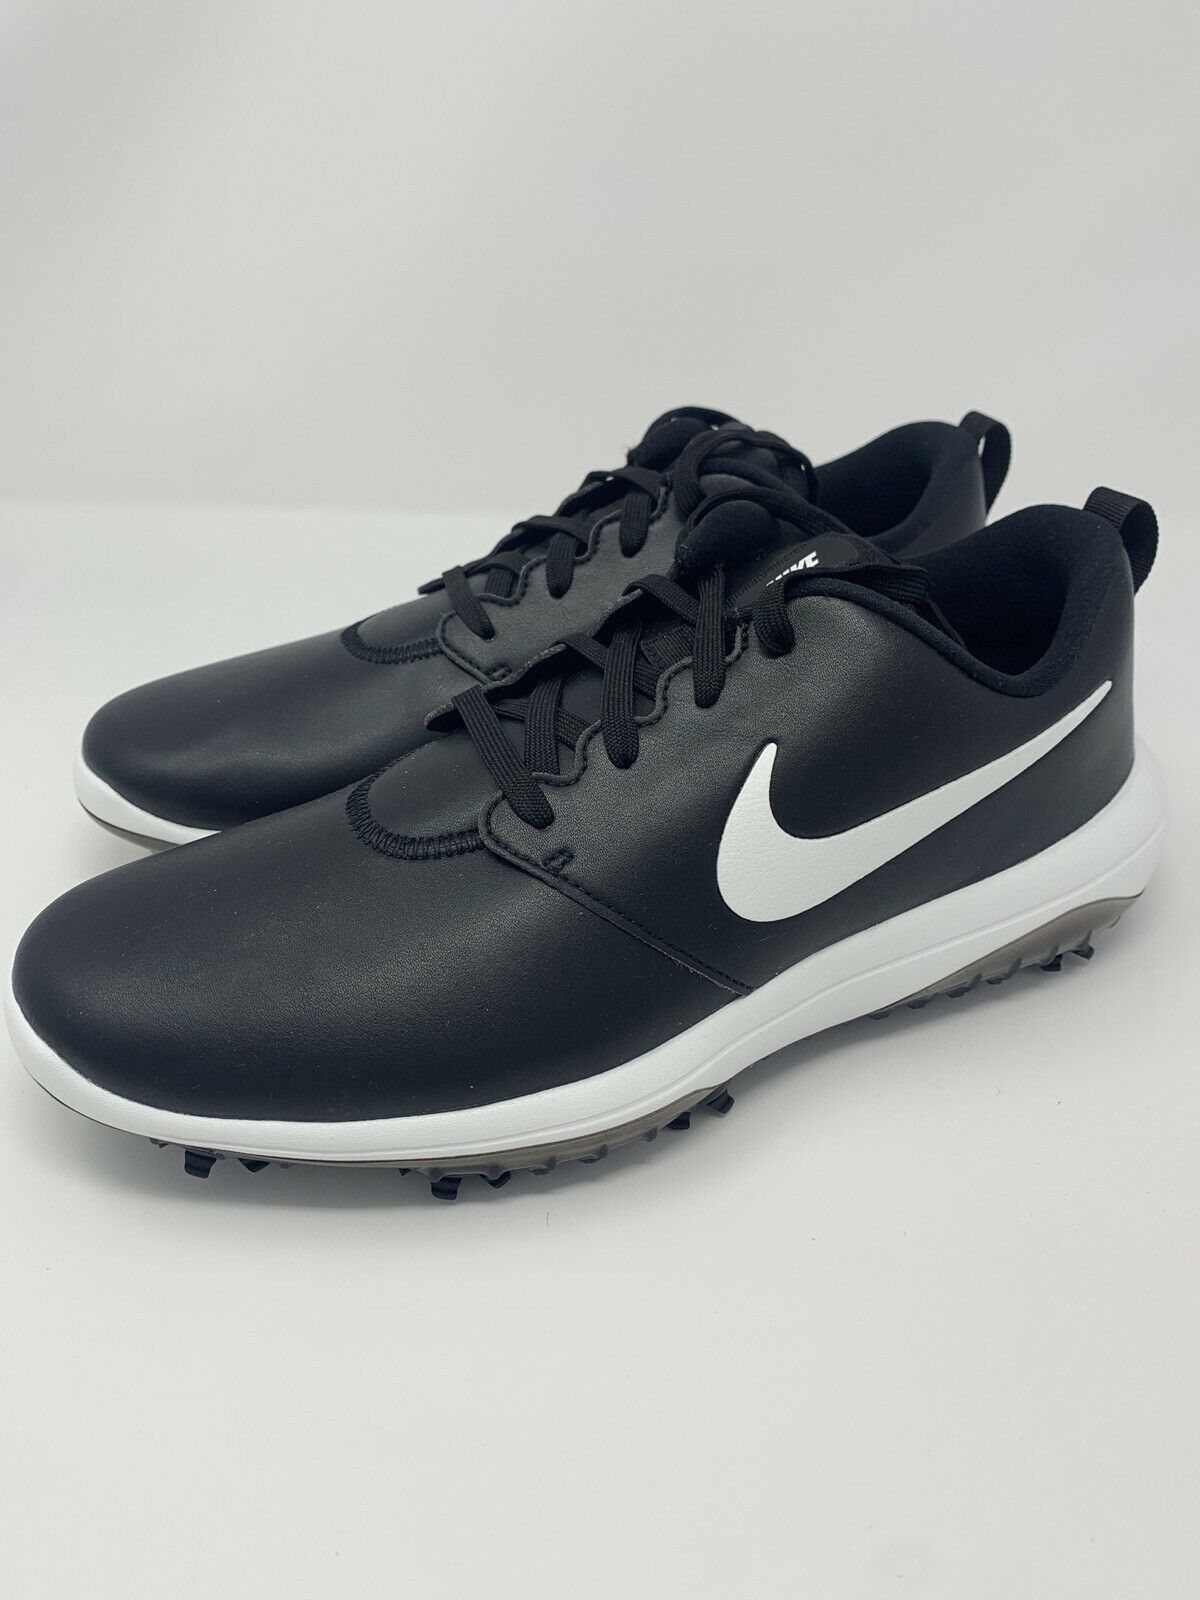 Nike Roshe G Tour Waterproof Golf Shoes Men’s Size 9 Black AR5580-001 NEW